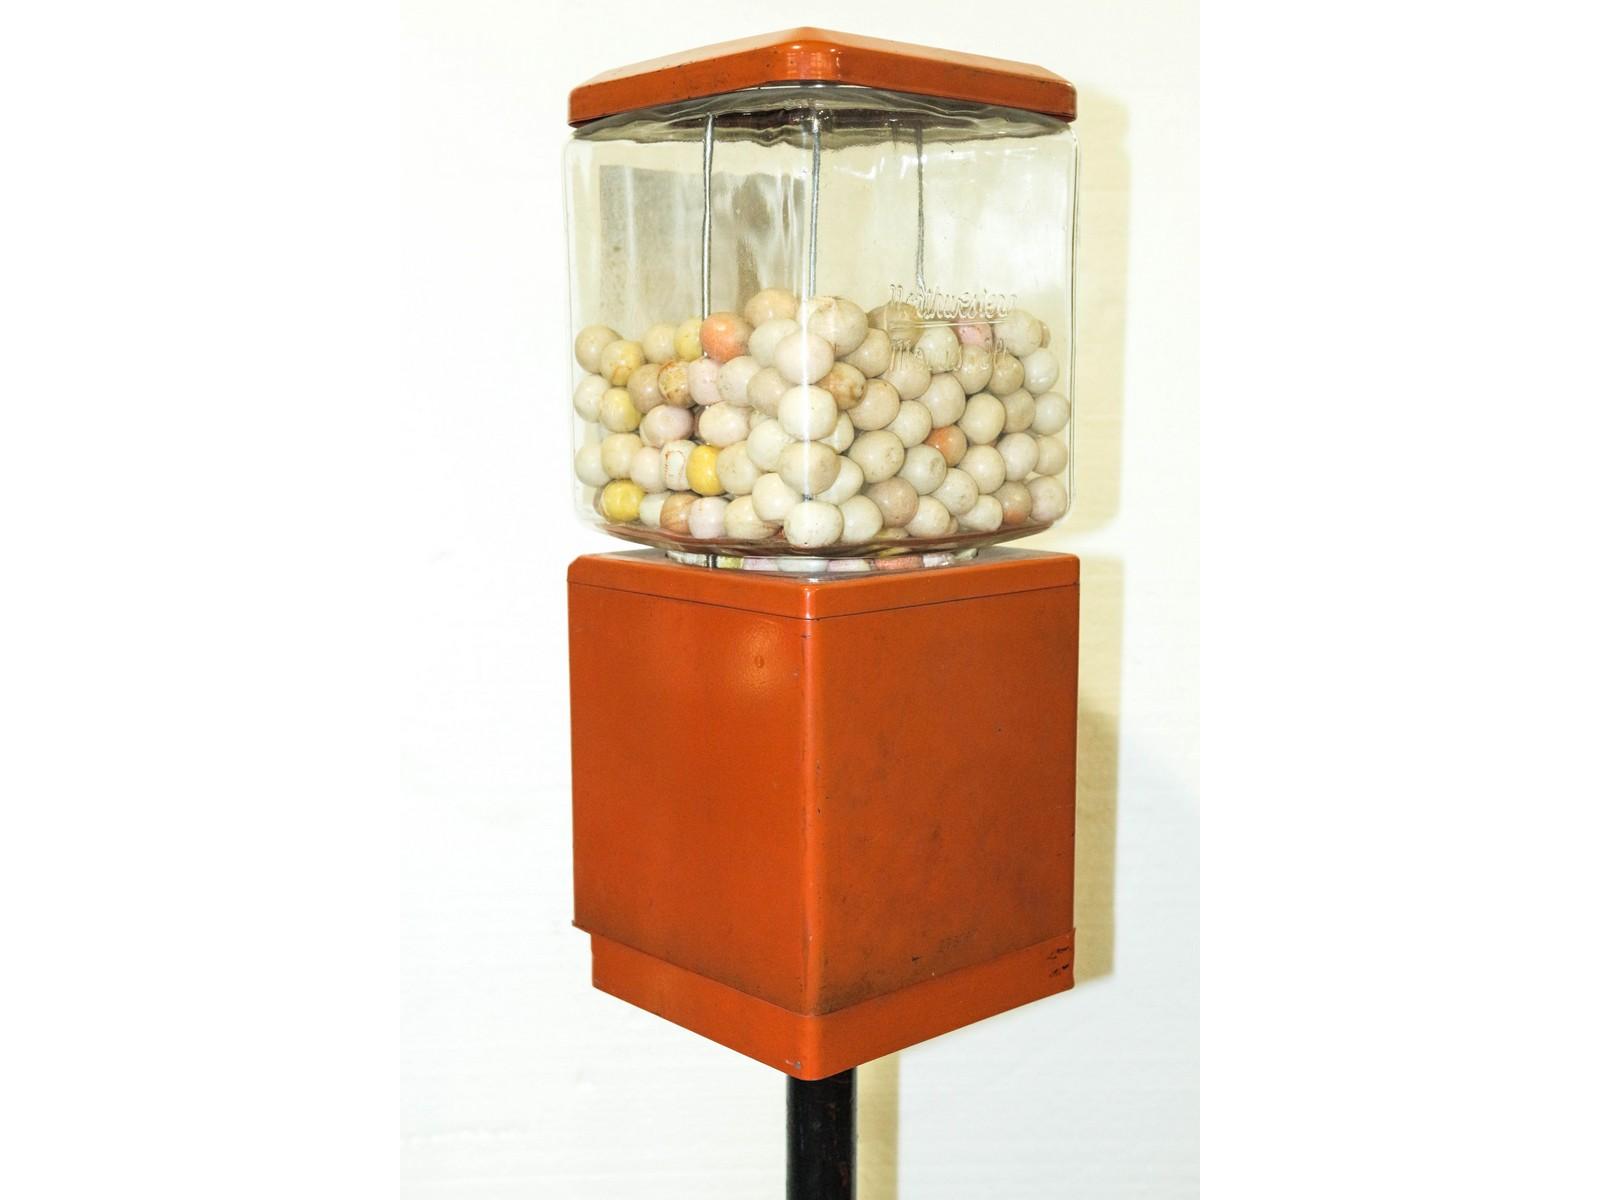 Gumball Candy Peanut Machine Vintage